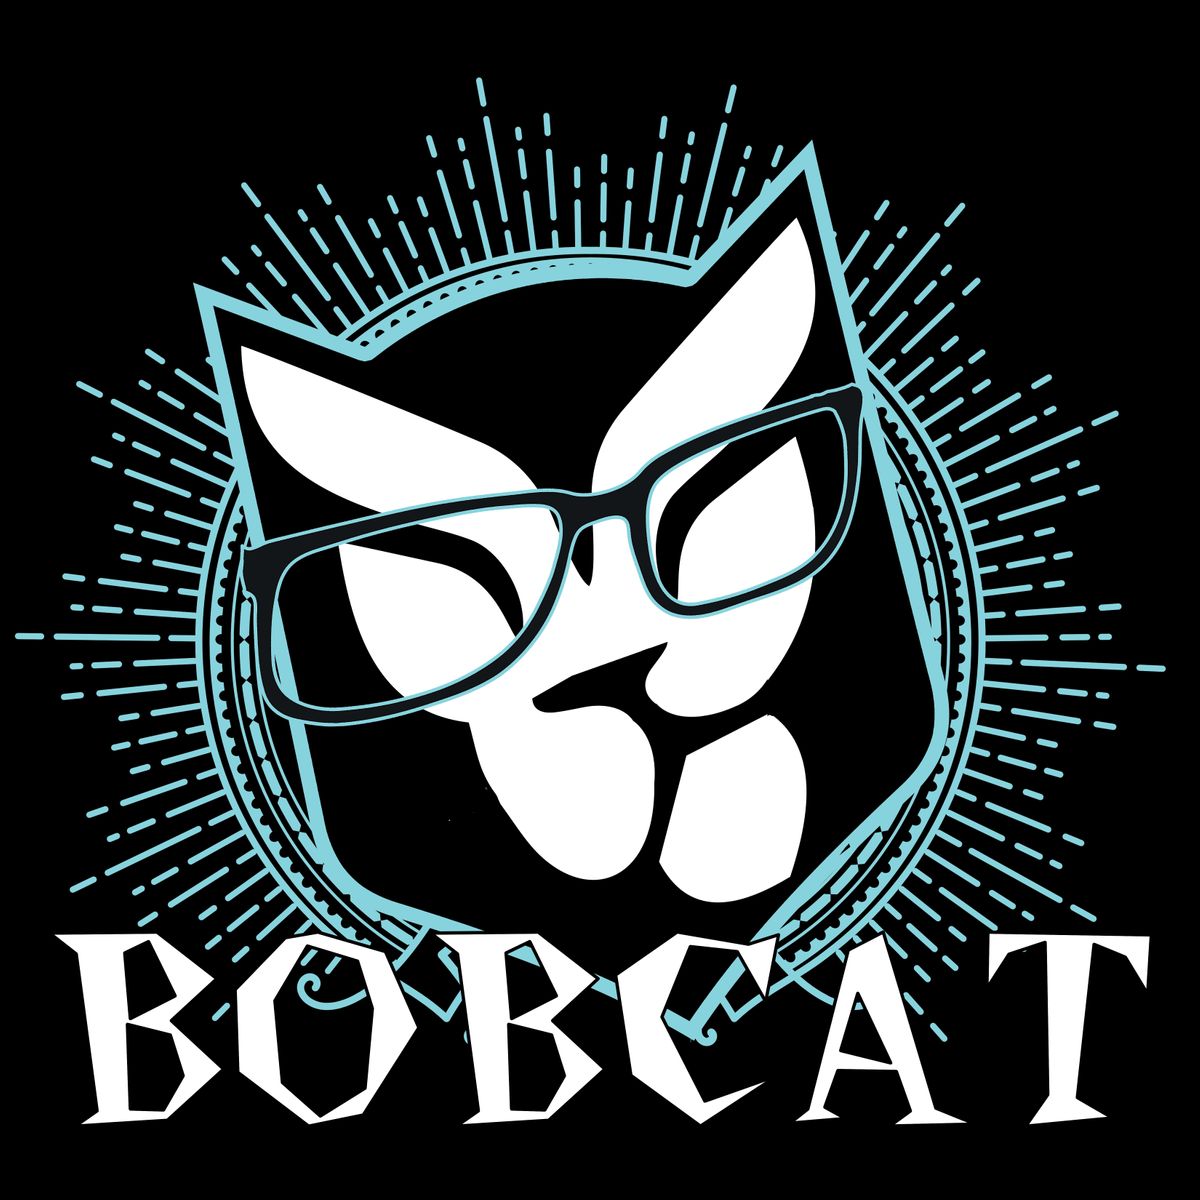 Bobcat Live At Montrose Saloon Chicago IL